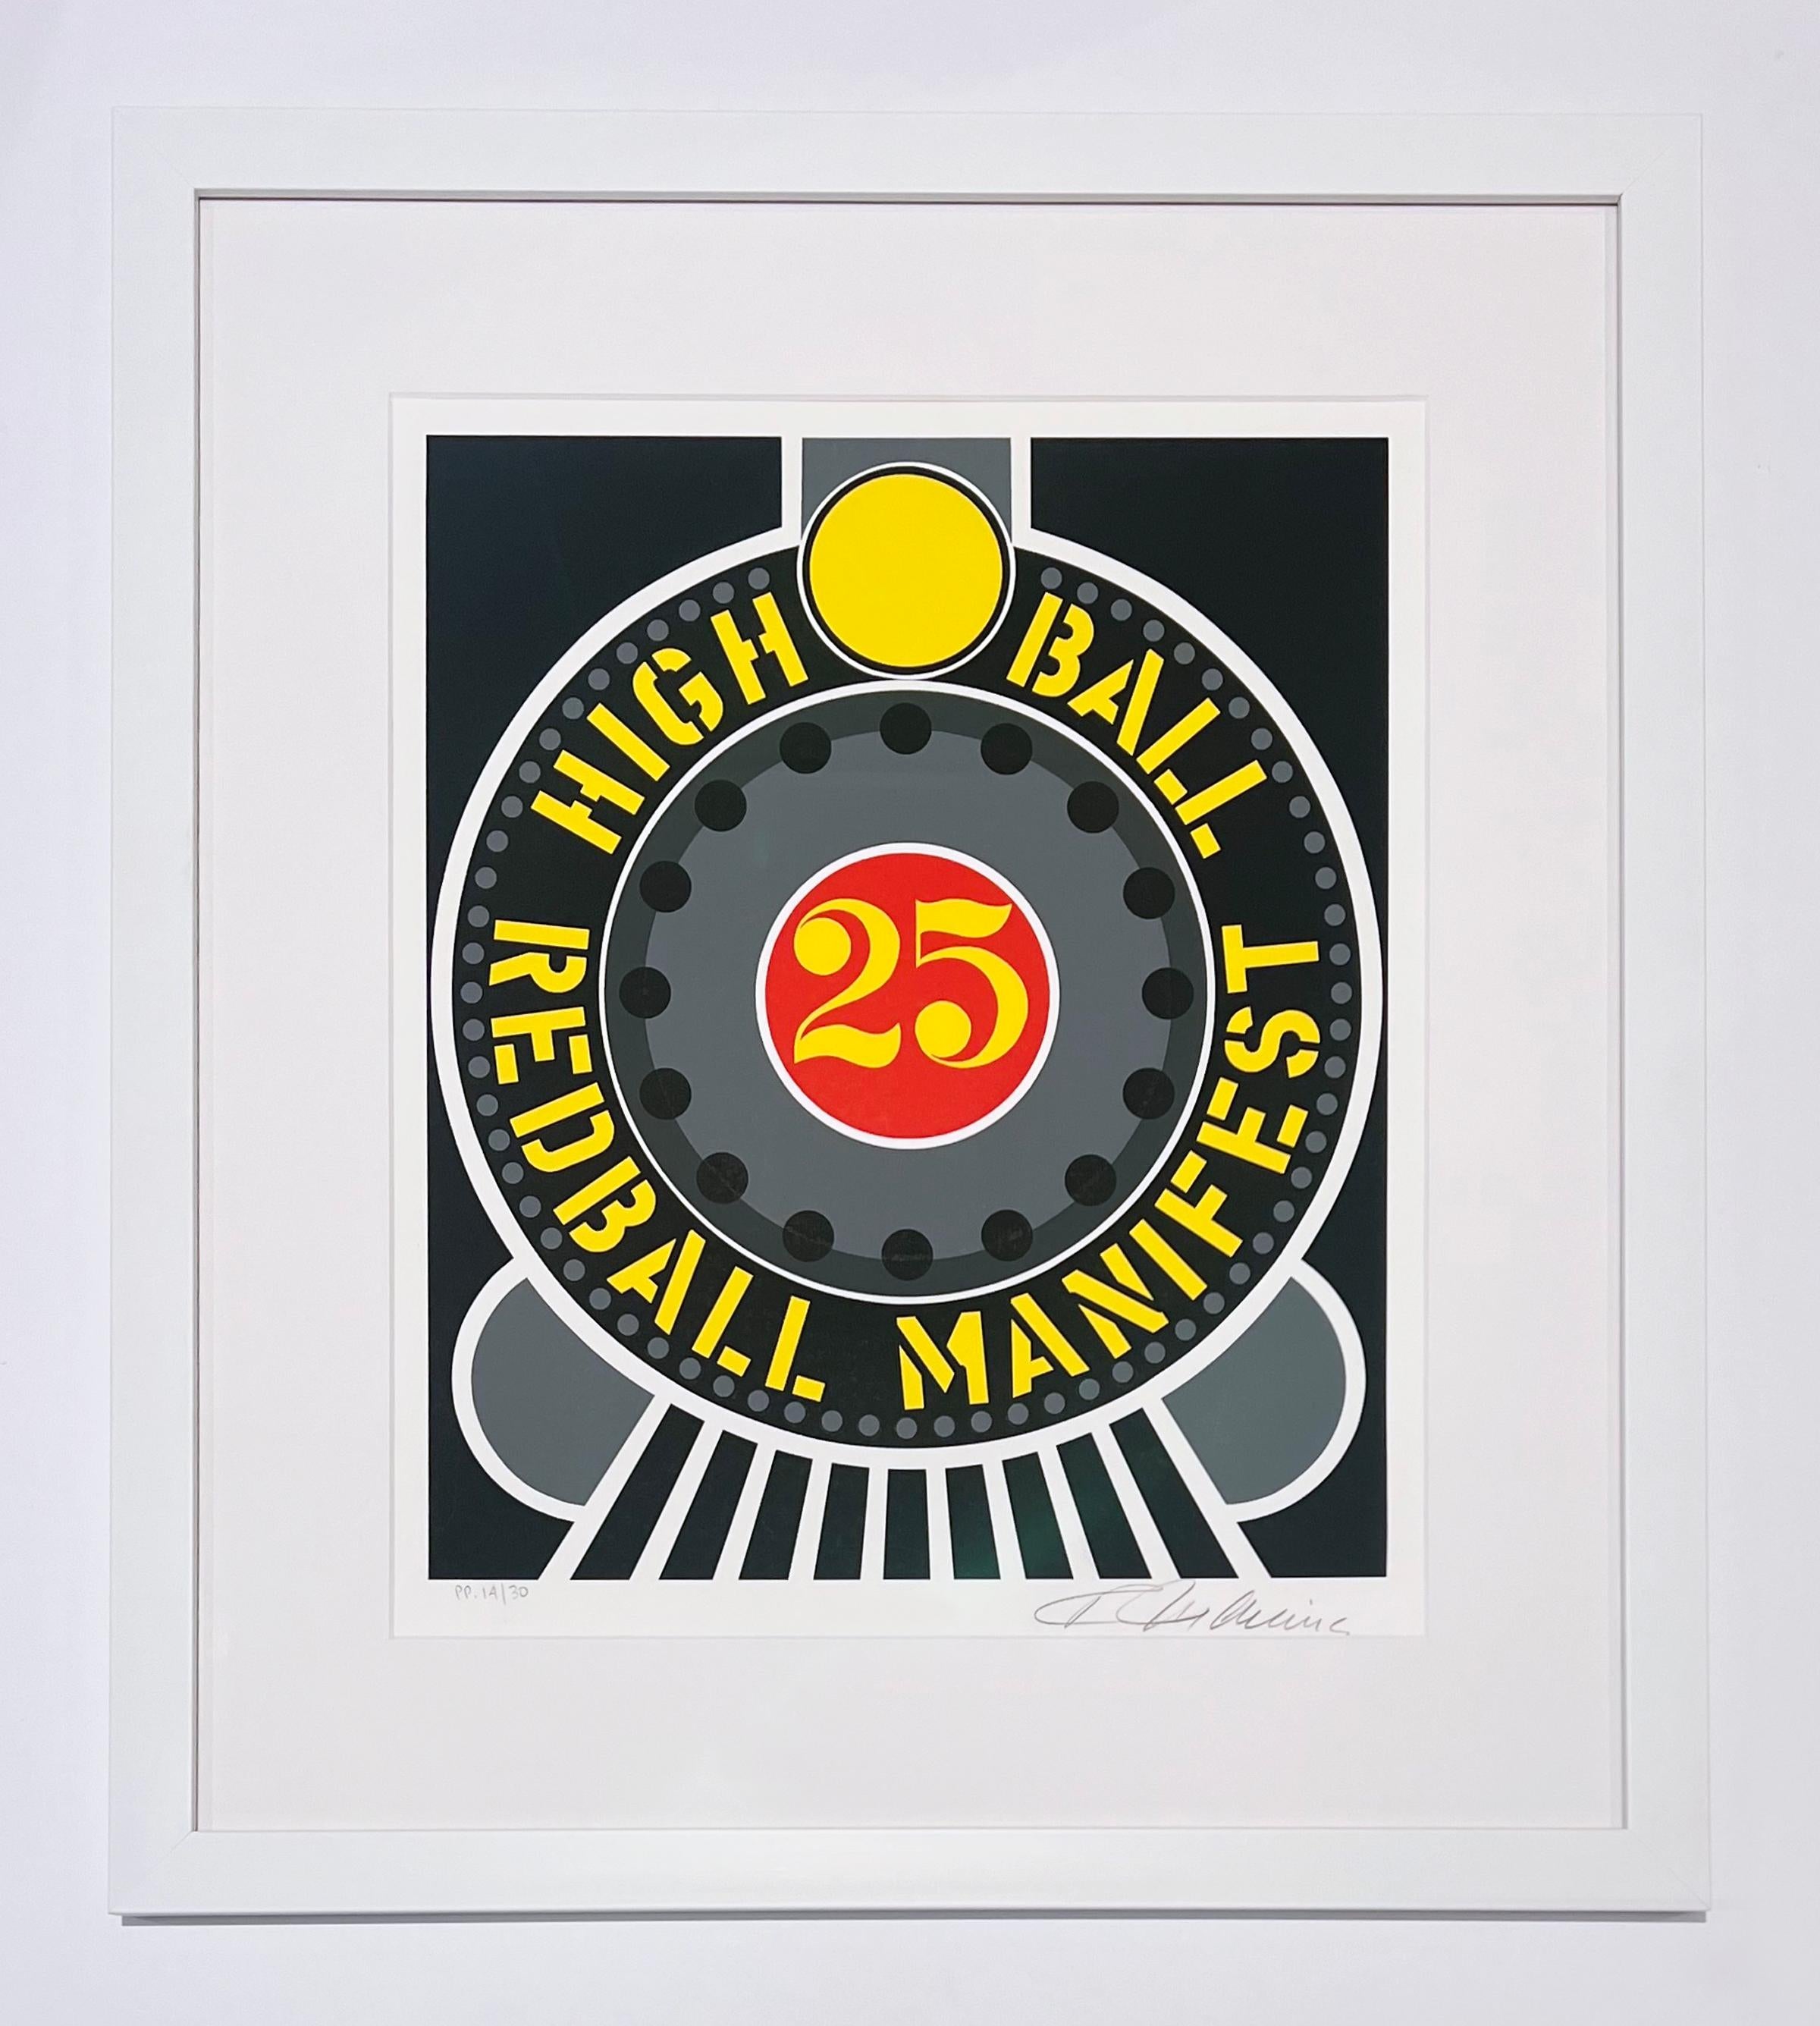 Highball on the Redball Manifest - Print by Robert Indiana